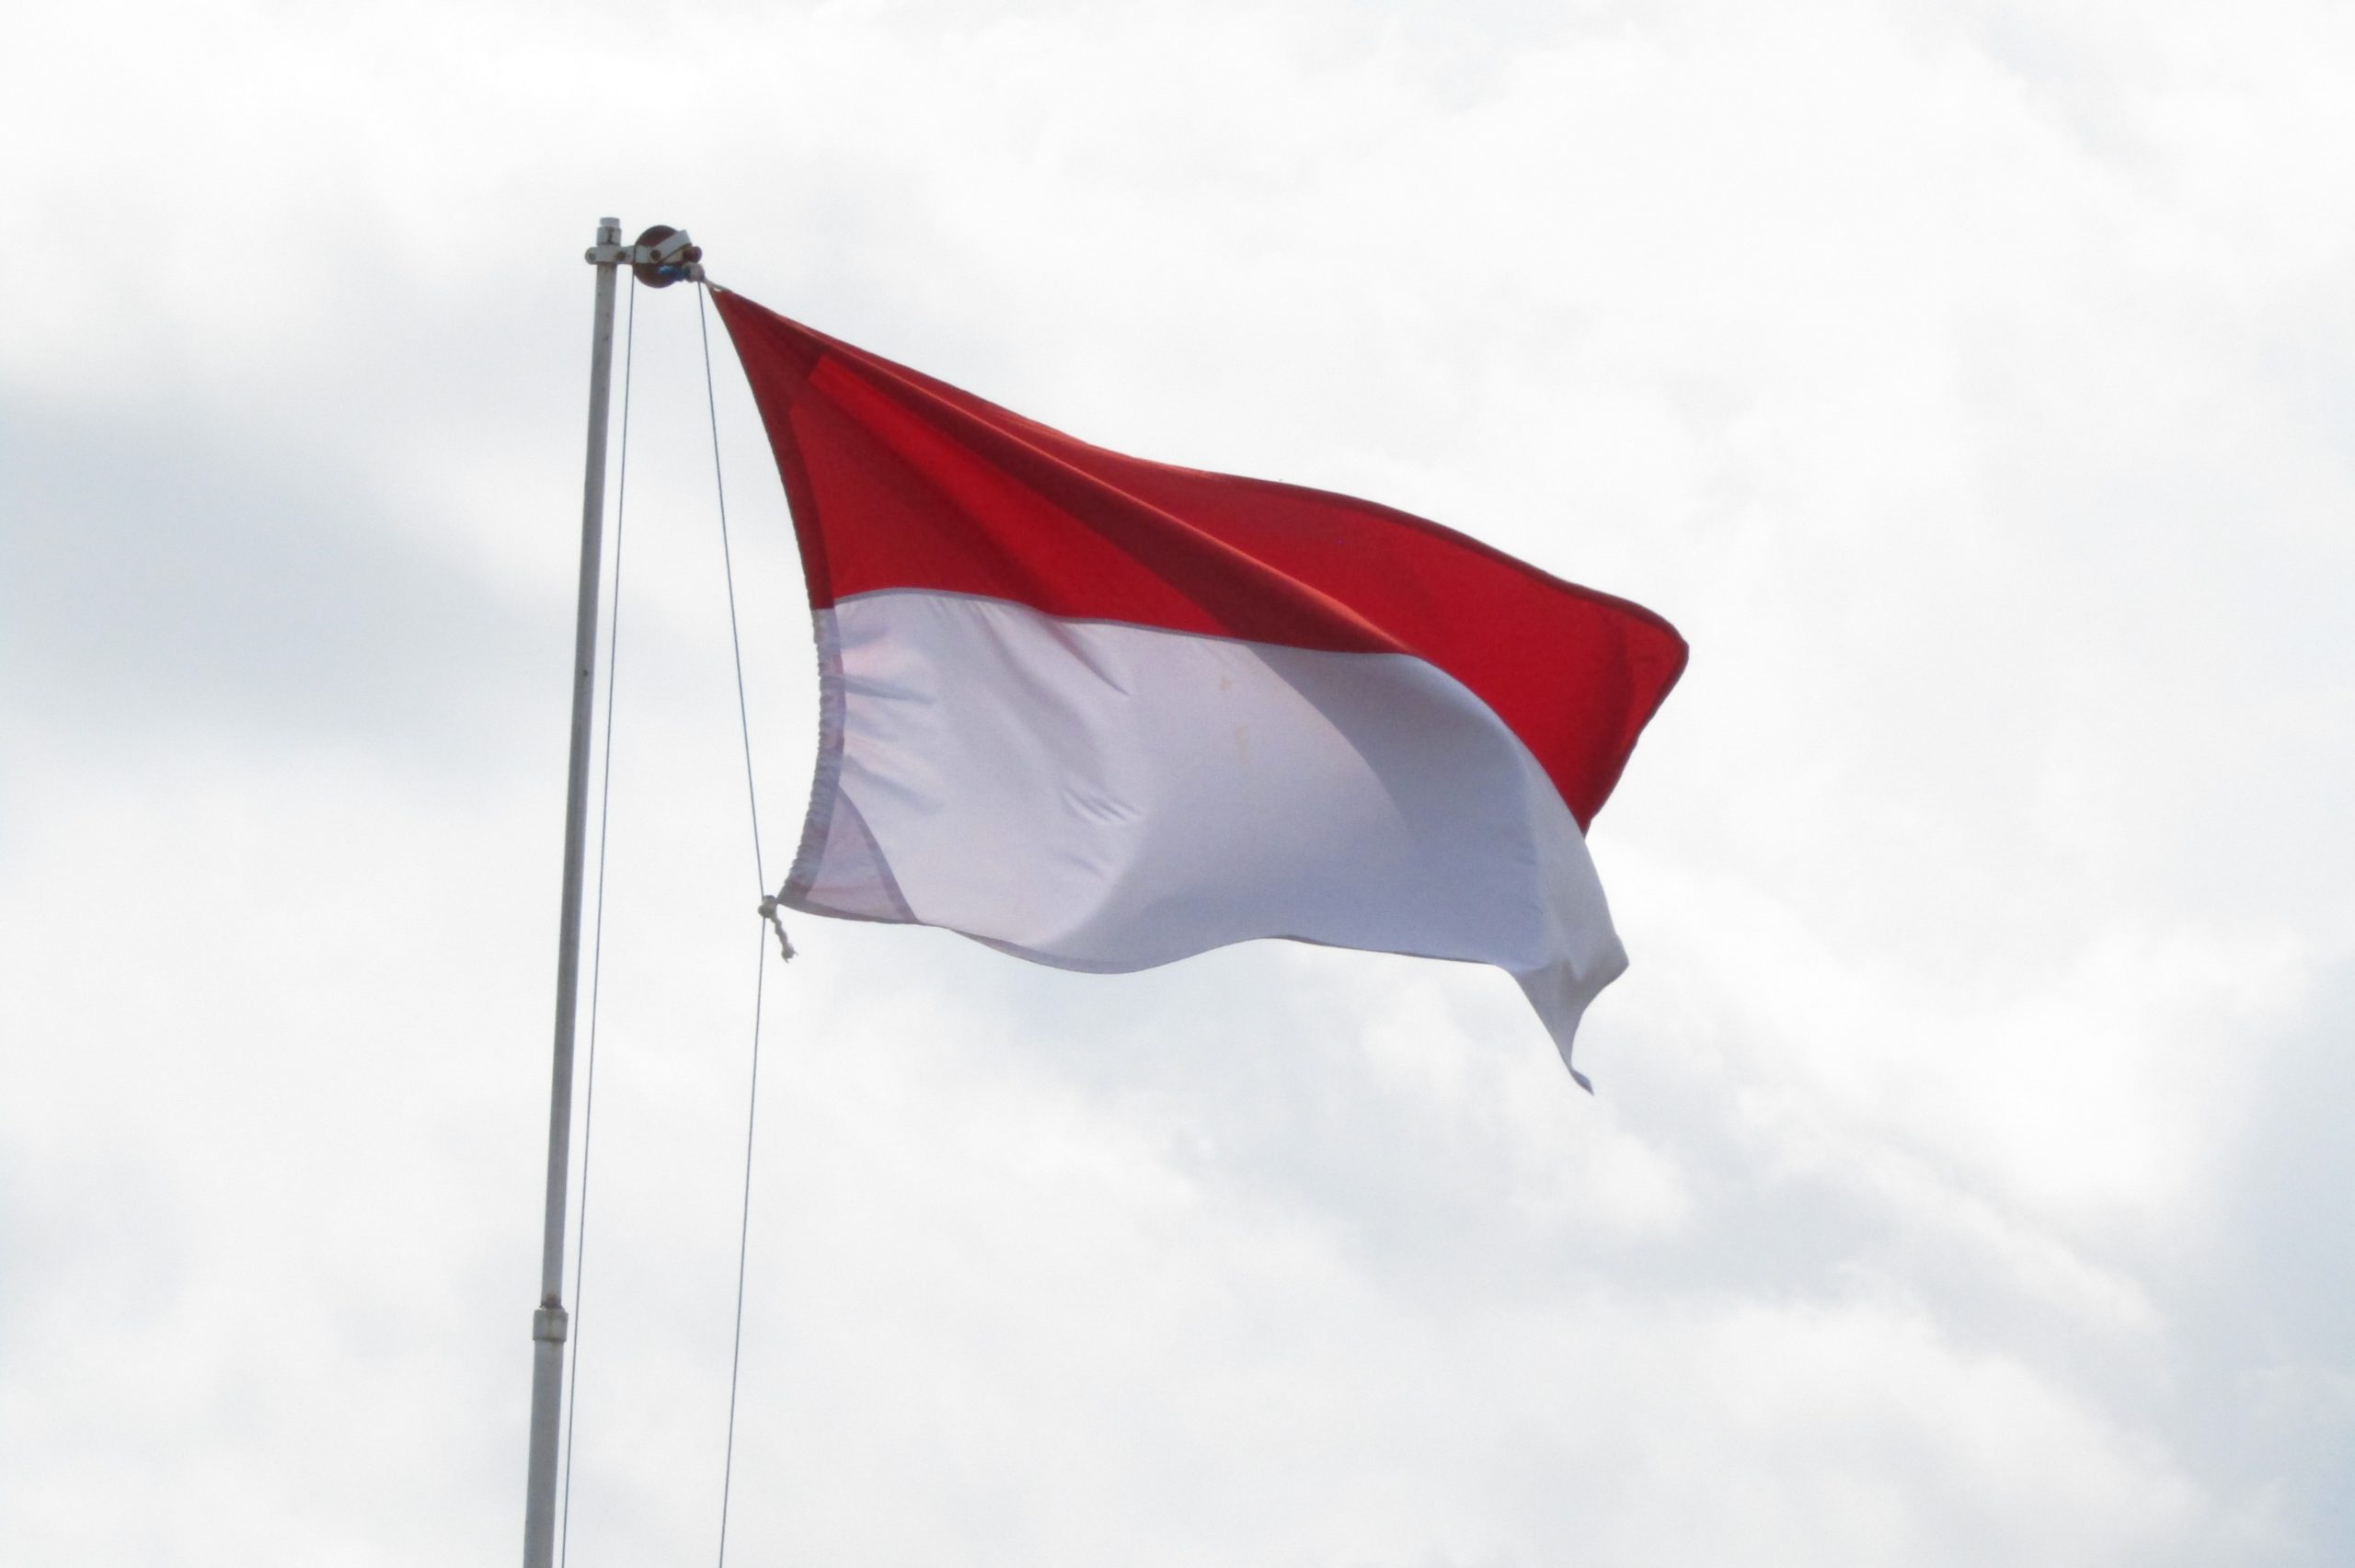 Ke-Warga Negara (Indonesia)-an